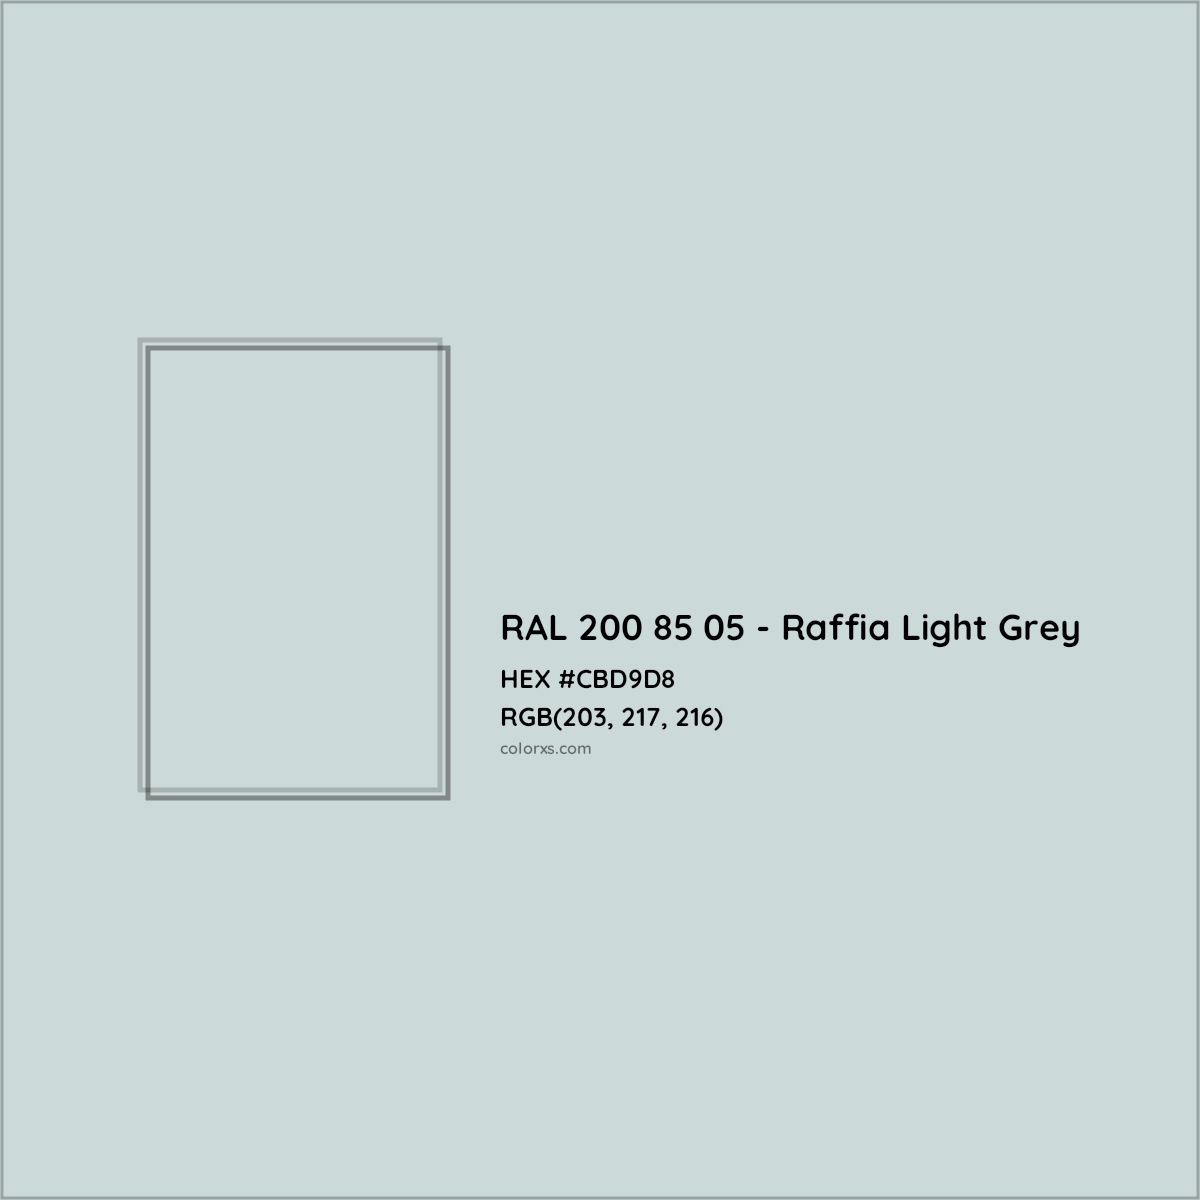 HEX #CBD9D8 RAL 200 85 05 - Raffia Light Grey CMS RAL Design - Color Code